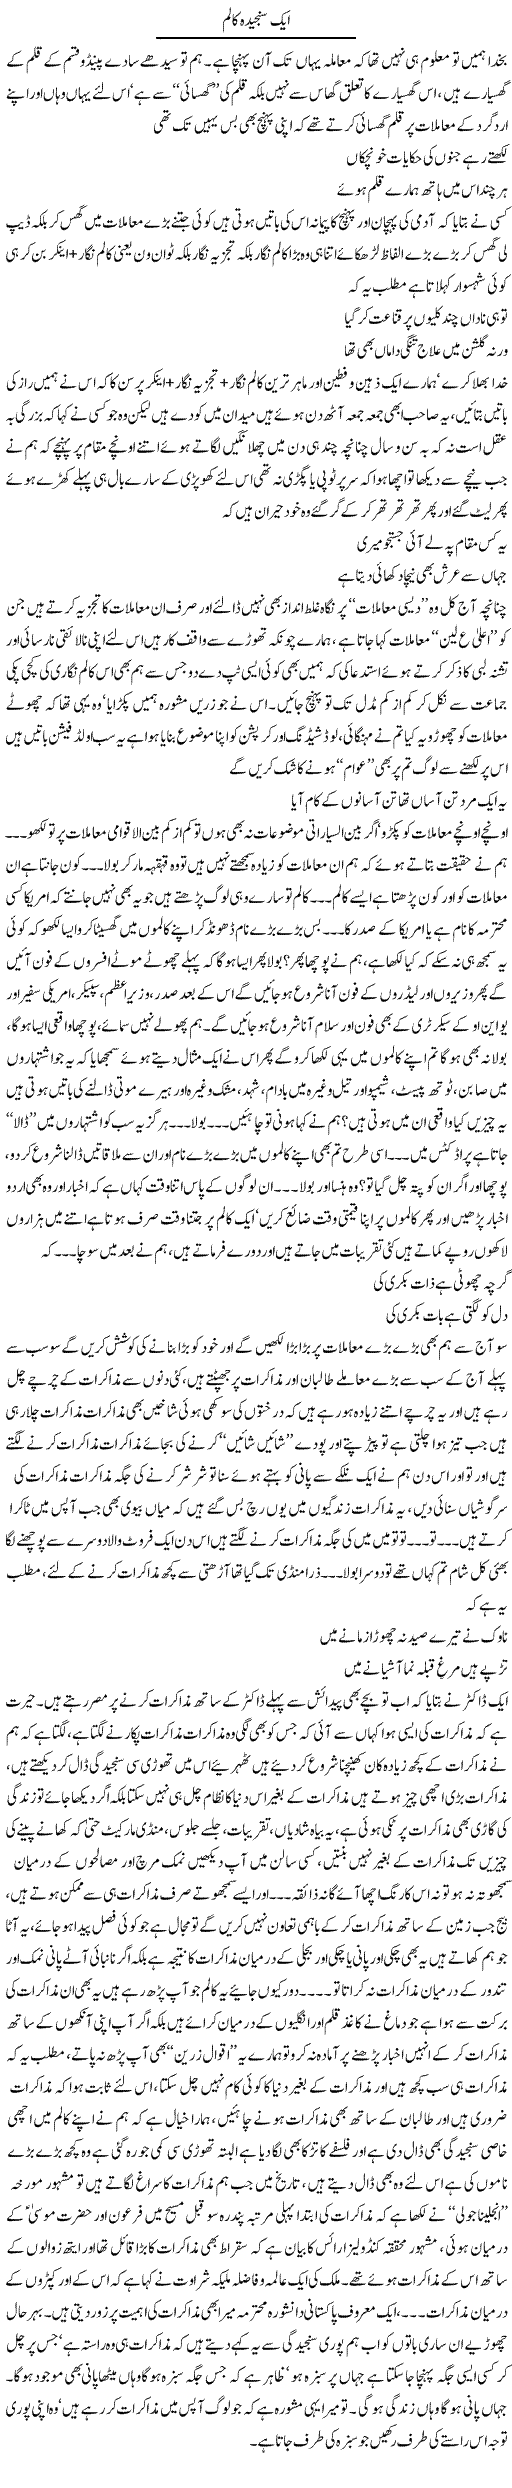 Aik Sanjeeda Column | Saad Ullah Jan Barq | Daily Urdu Columns